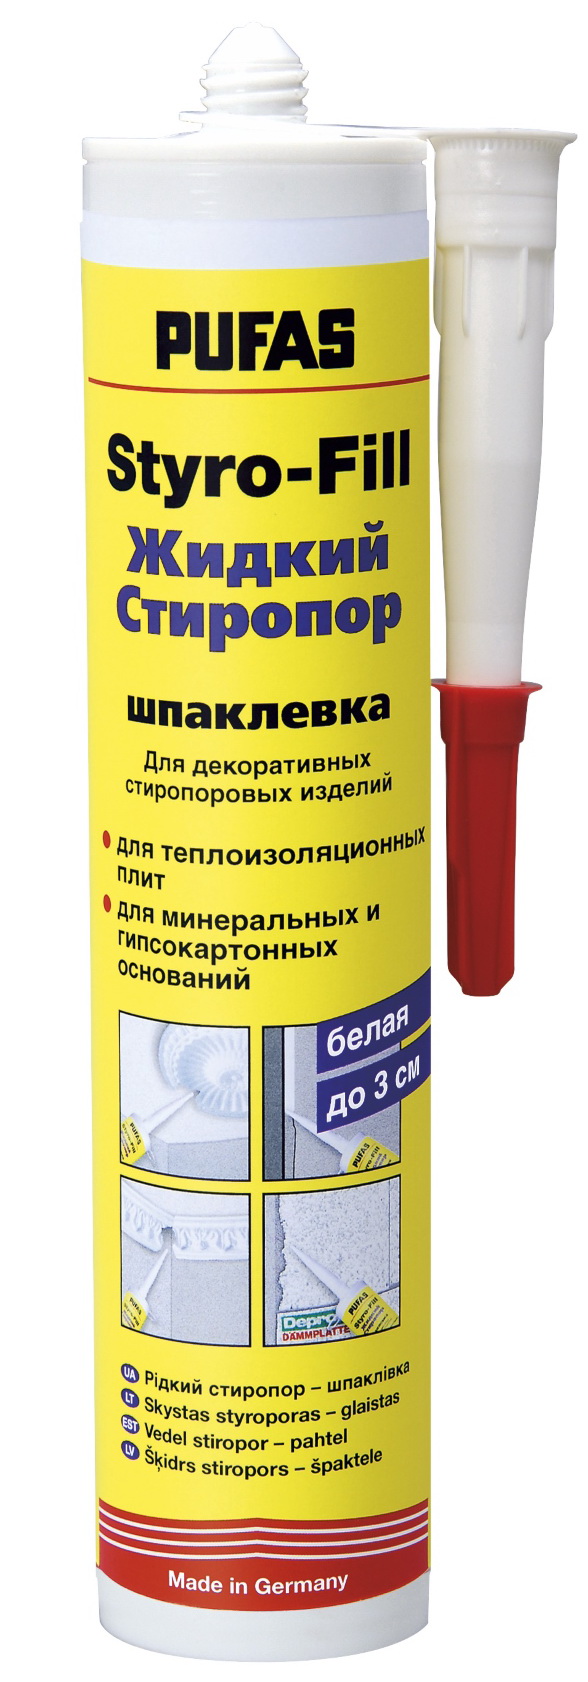 Pufas Styro-Fill, 0.3 кг, Стиропор-шпатлевка жидкая